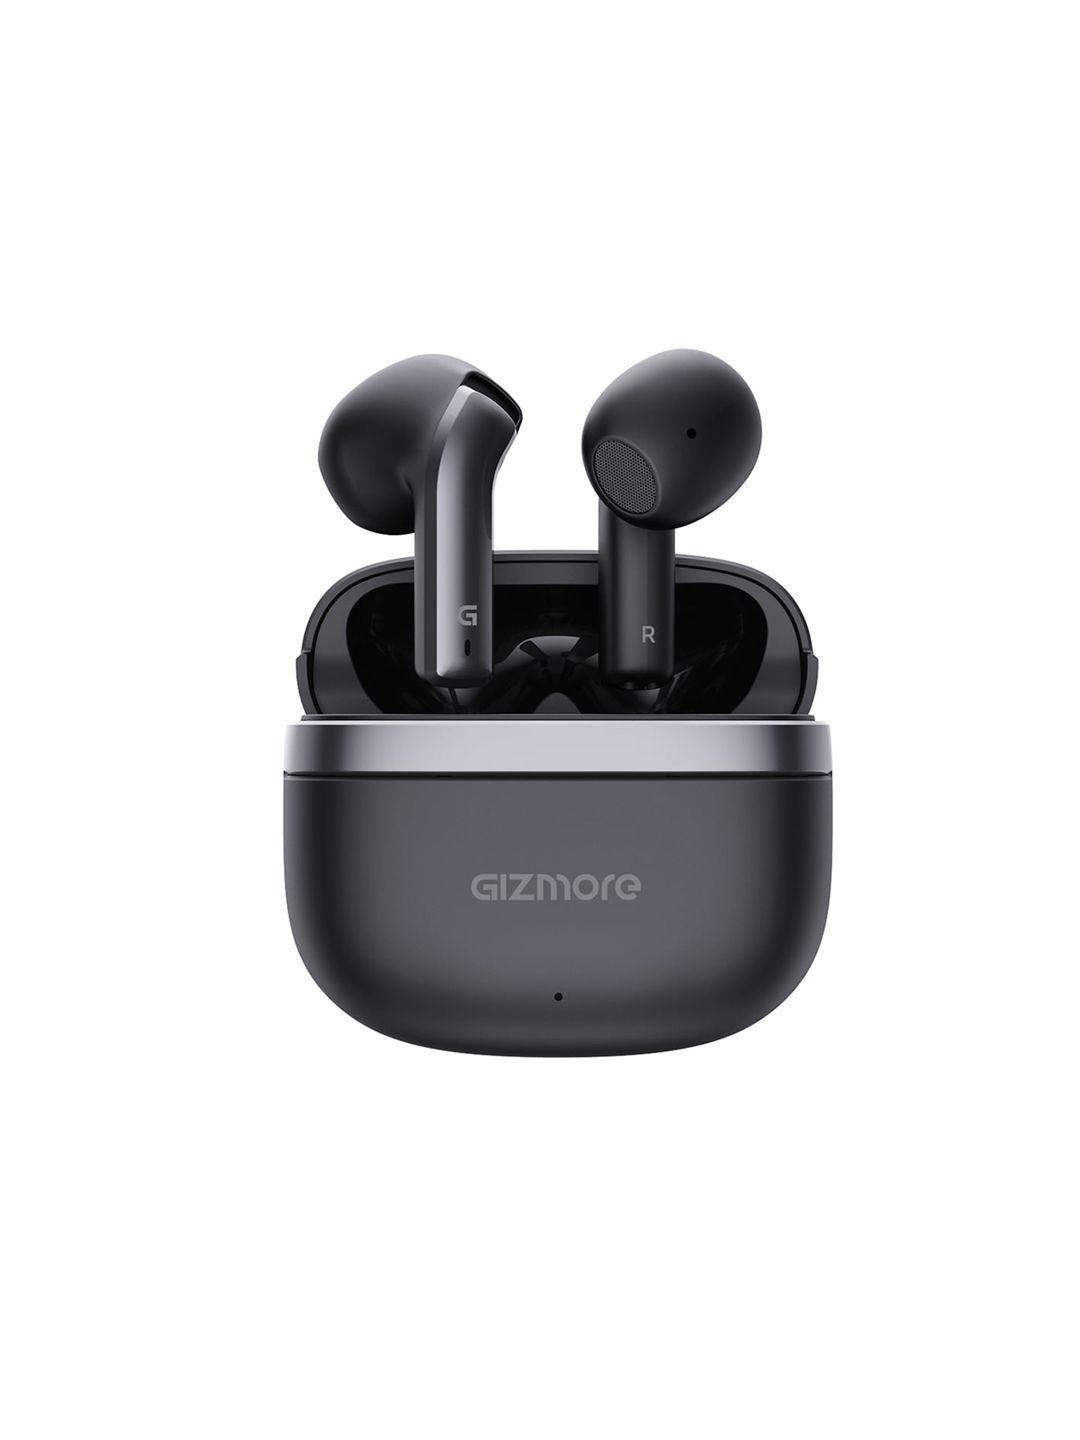 gizmore giz-809pro true wireless earbuds with dual enc & digital display